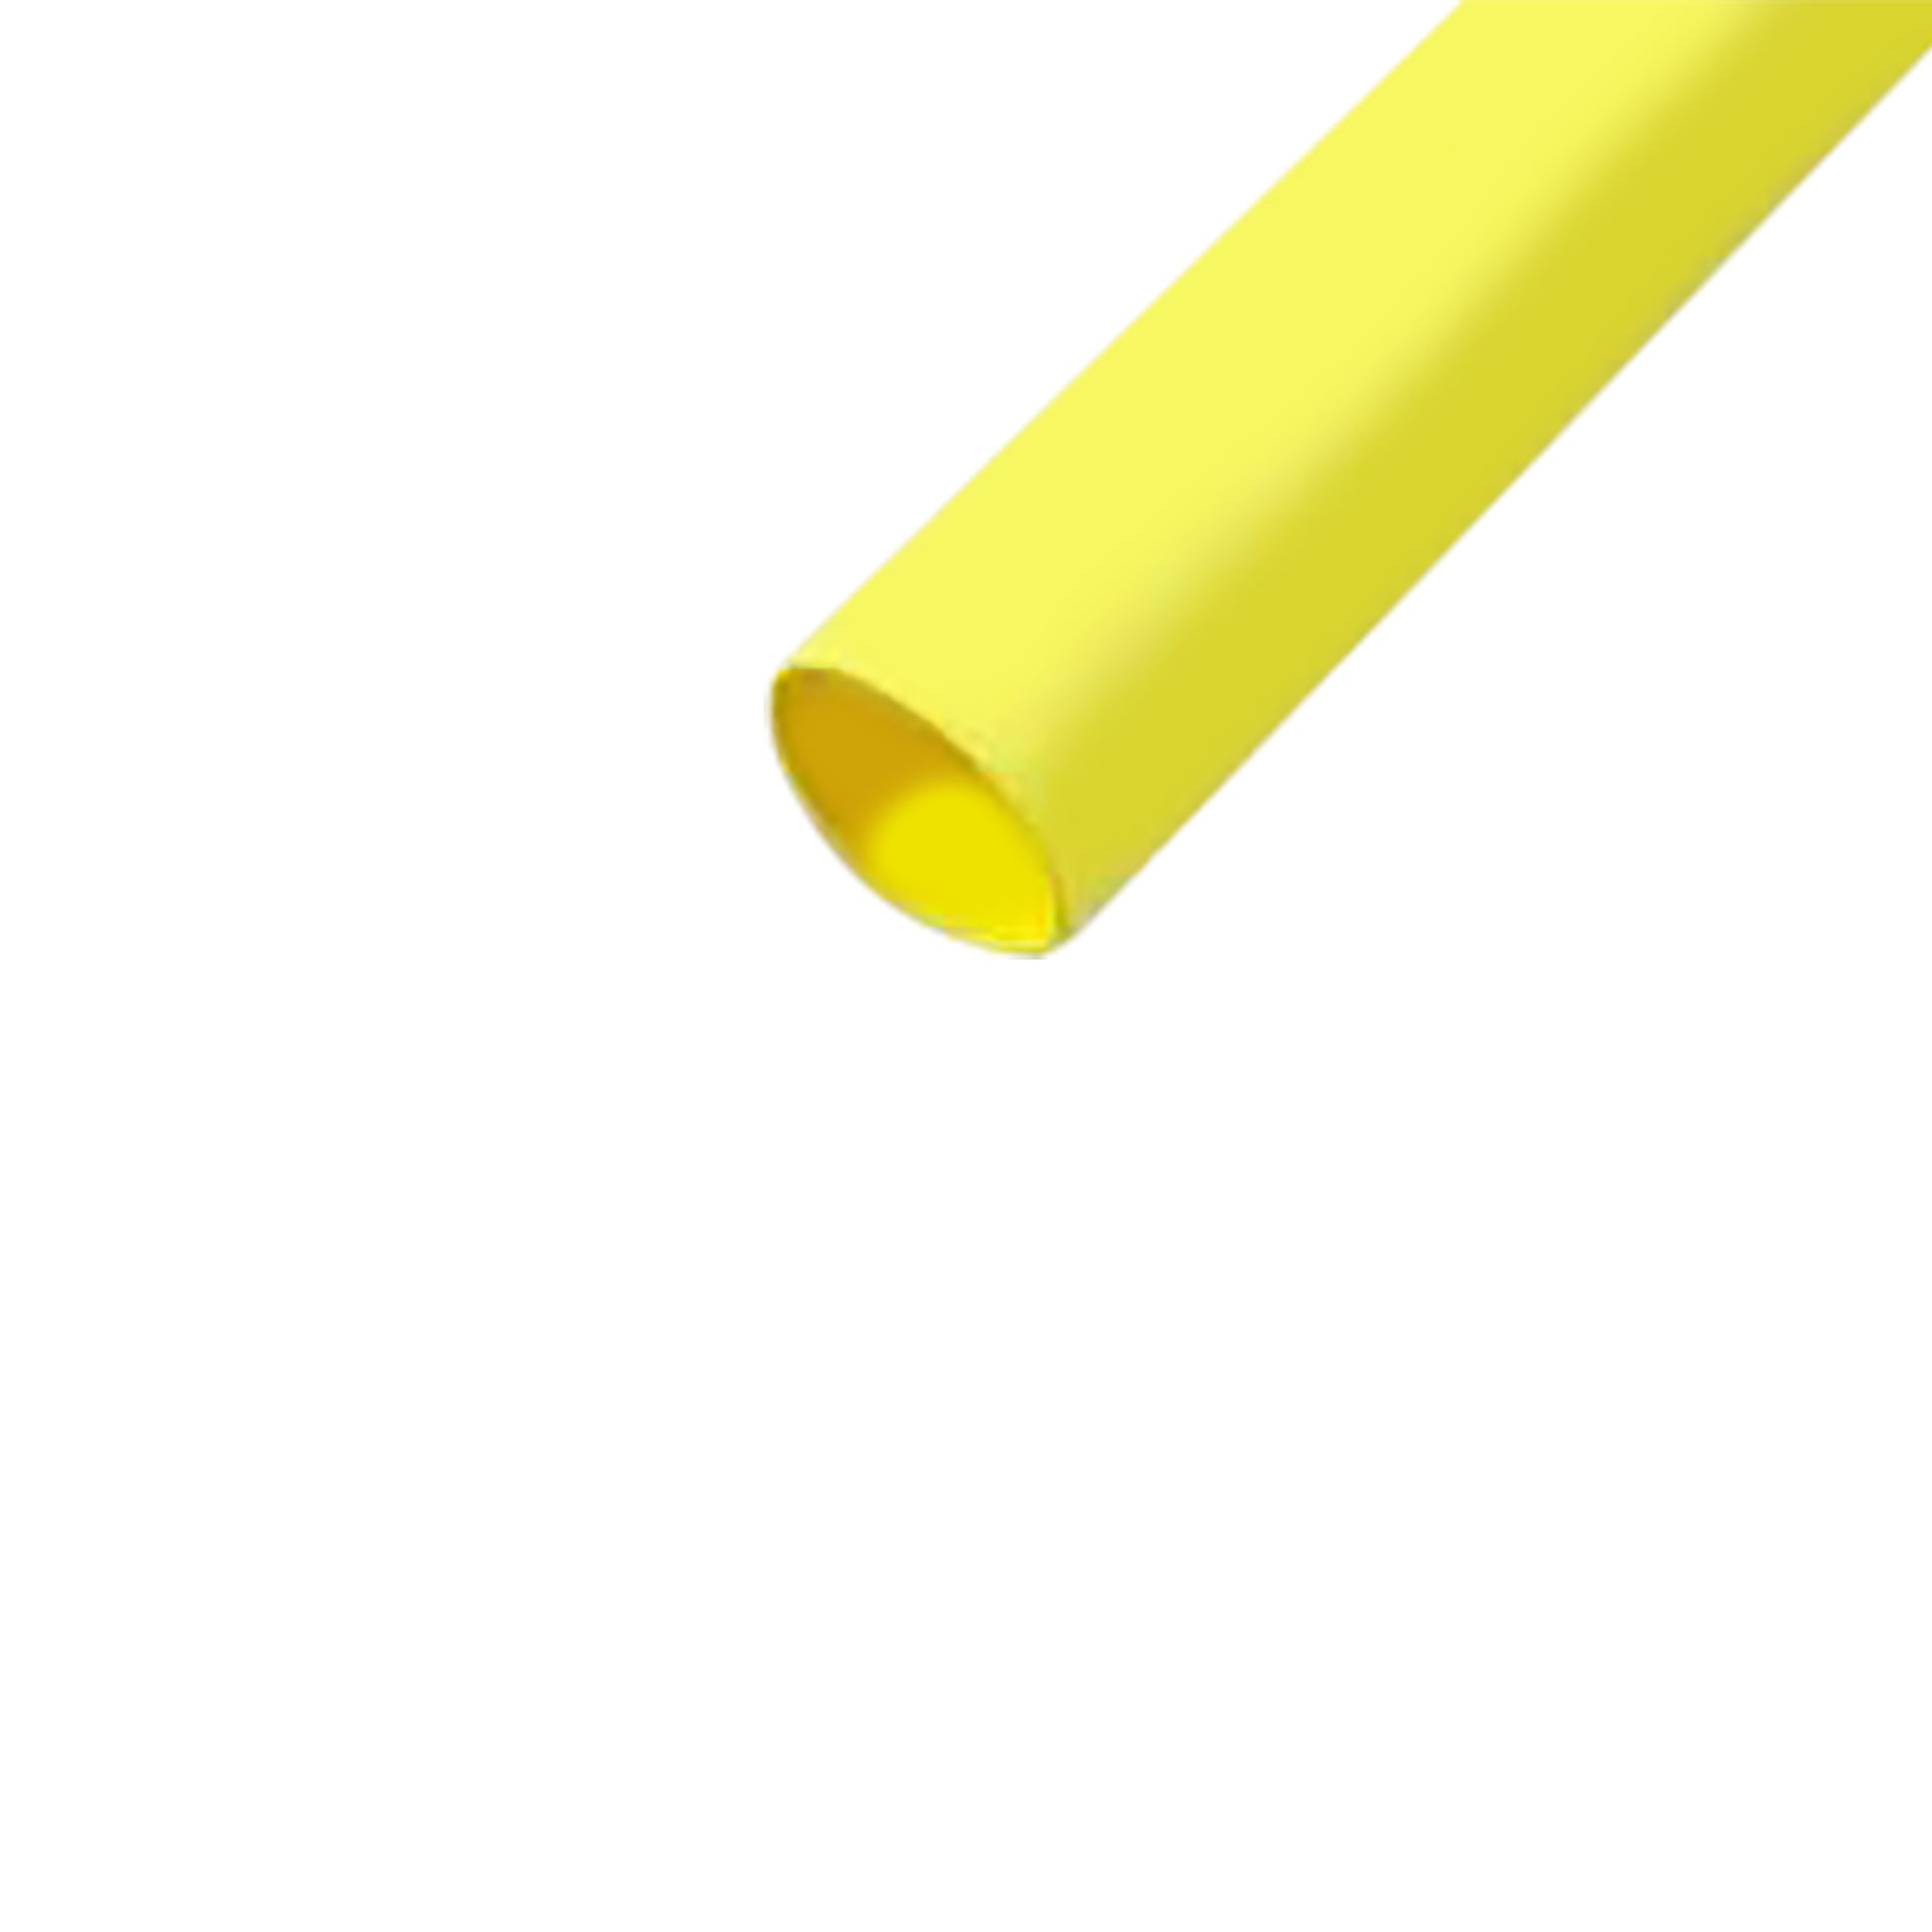 Flexible Thin Single Wall Non-Adhesive Heat Shrink Tubing 2:1 Yellow 3/4" ID - 48" Inch 4 Pack